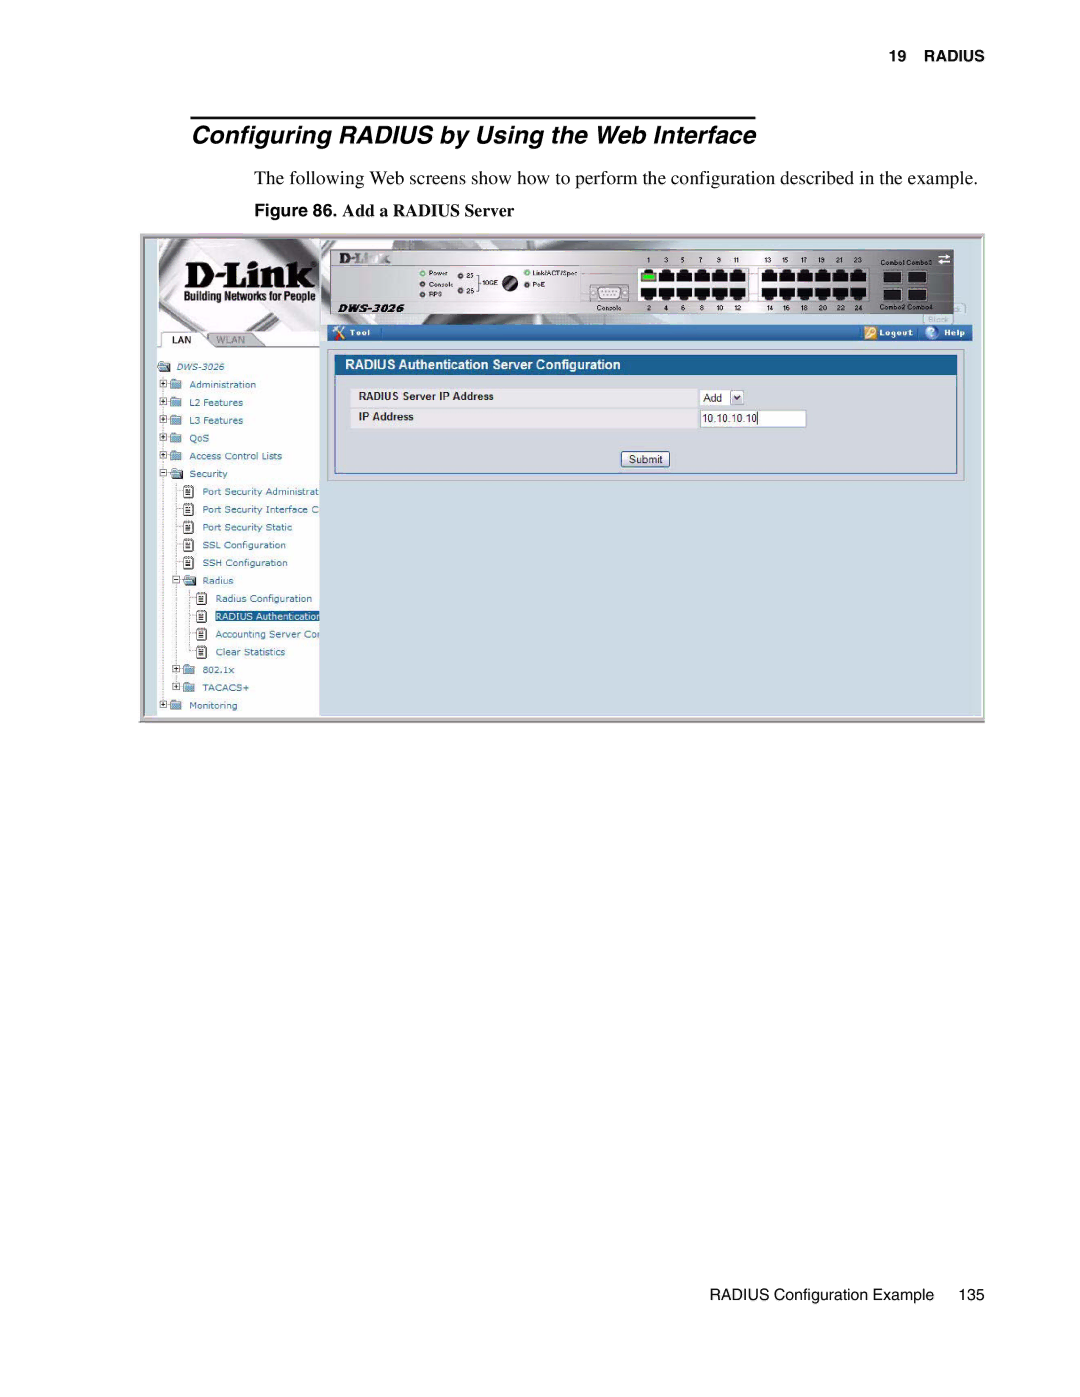 D-Link DWS-3000 manual Configuring Radius by Using the Web Interface, Add a Radius Server 